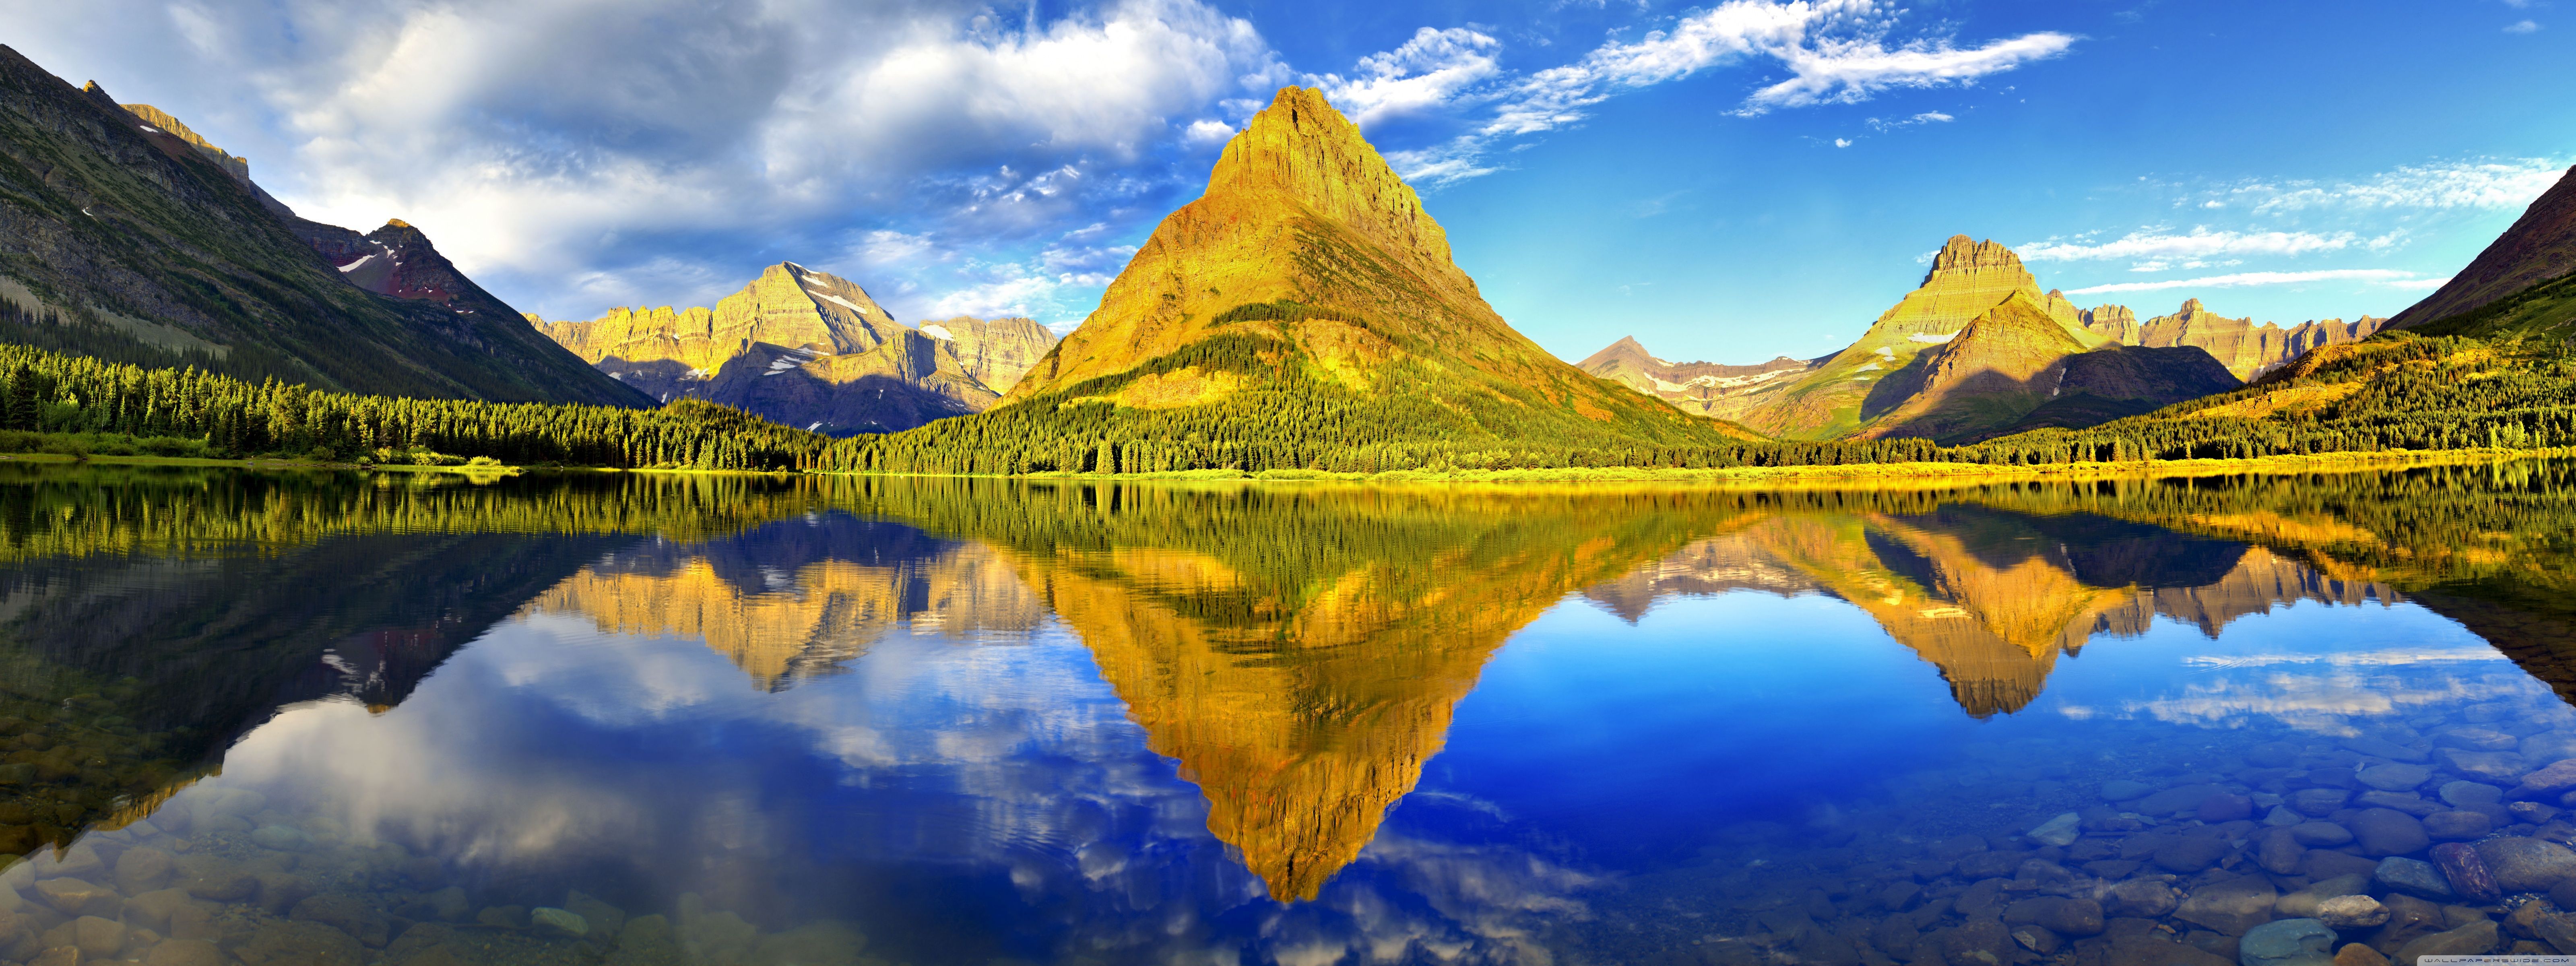 Windows 7 Panoramic Wallpaper. Glacier national park, National parks, Glacier national park montana